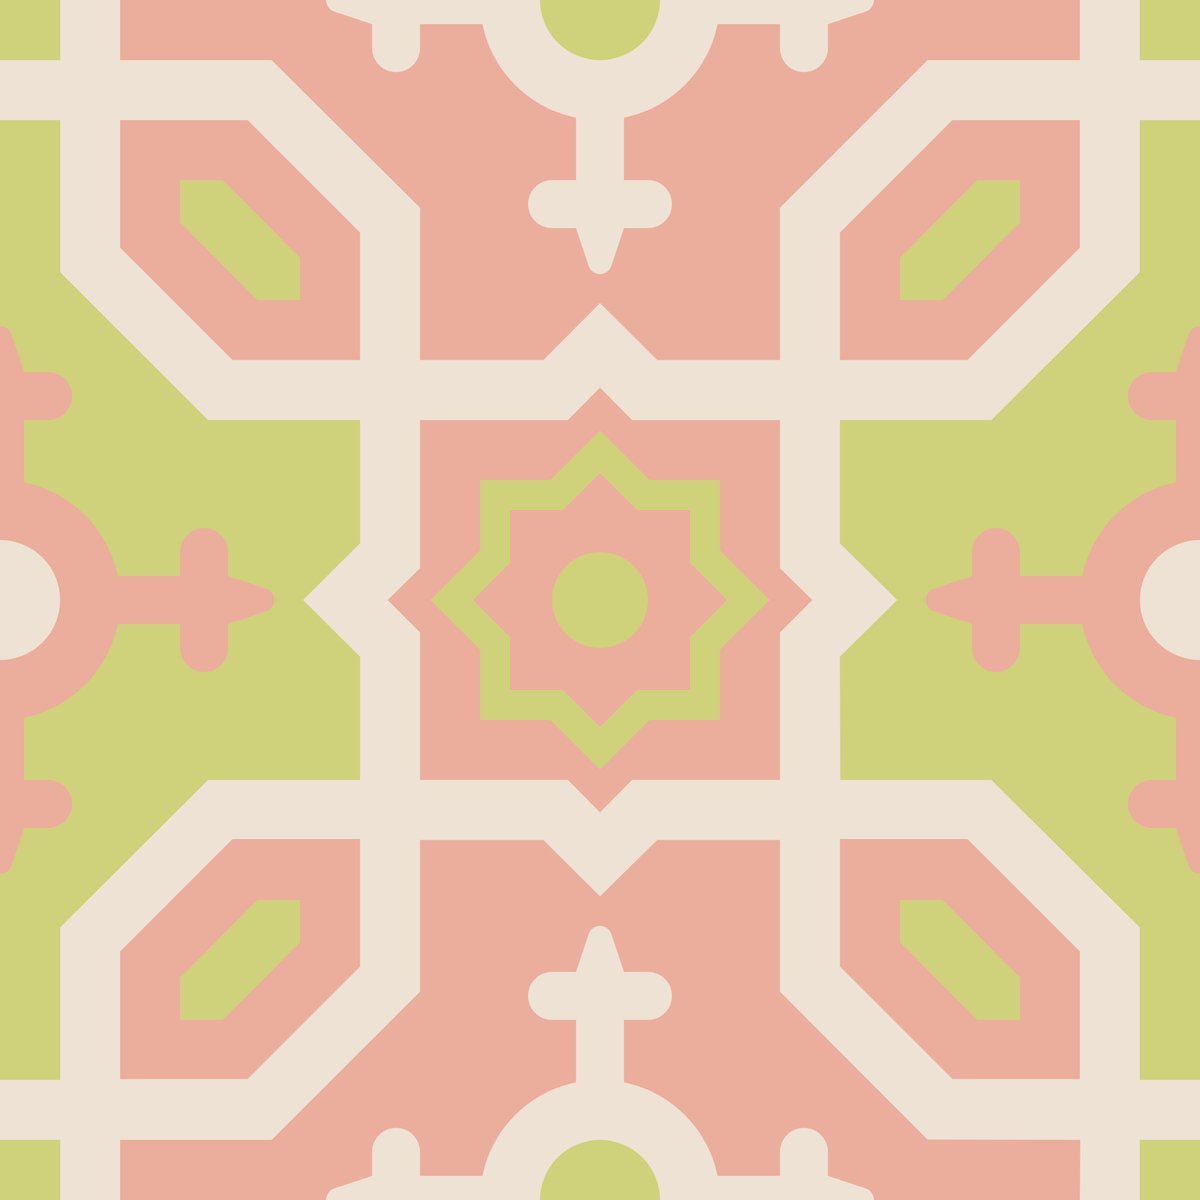 Geometric Pattern: Templo: Dashwood / Red Wolf redwolfoz.redbubble.com/works/15770197… via @redbubble spoonflower.com/designs/156792… via @spoonflower #art #geometricpattern #geometry #spanish #retro #tile #cross #circle #garden